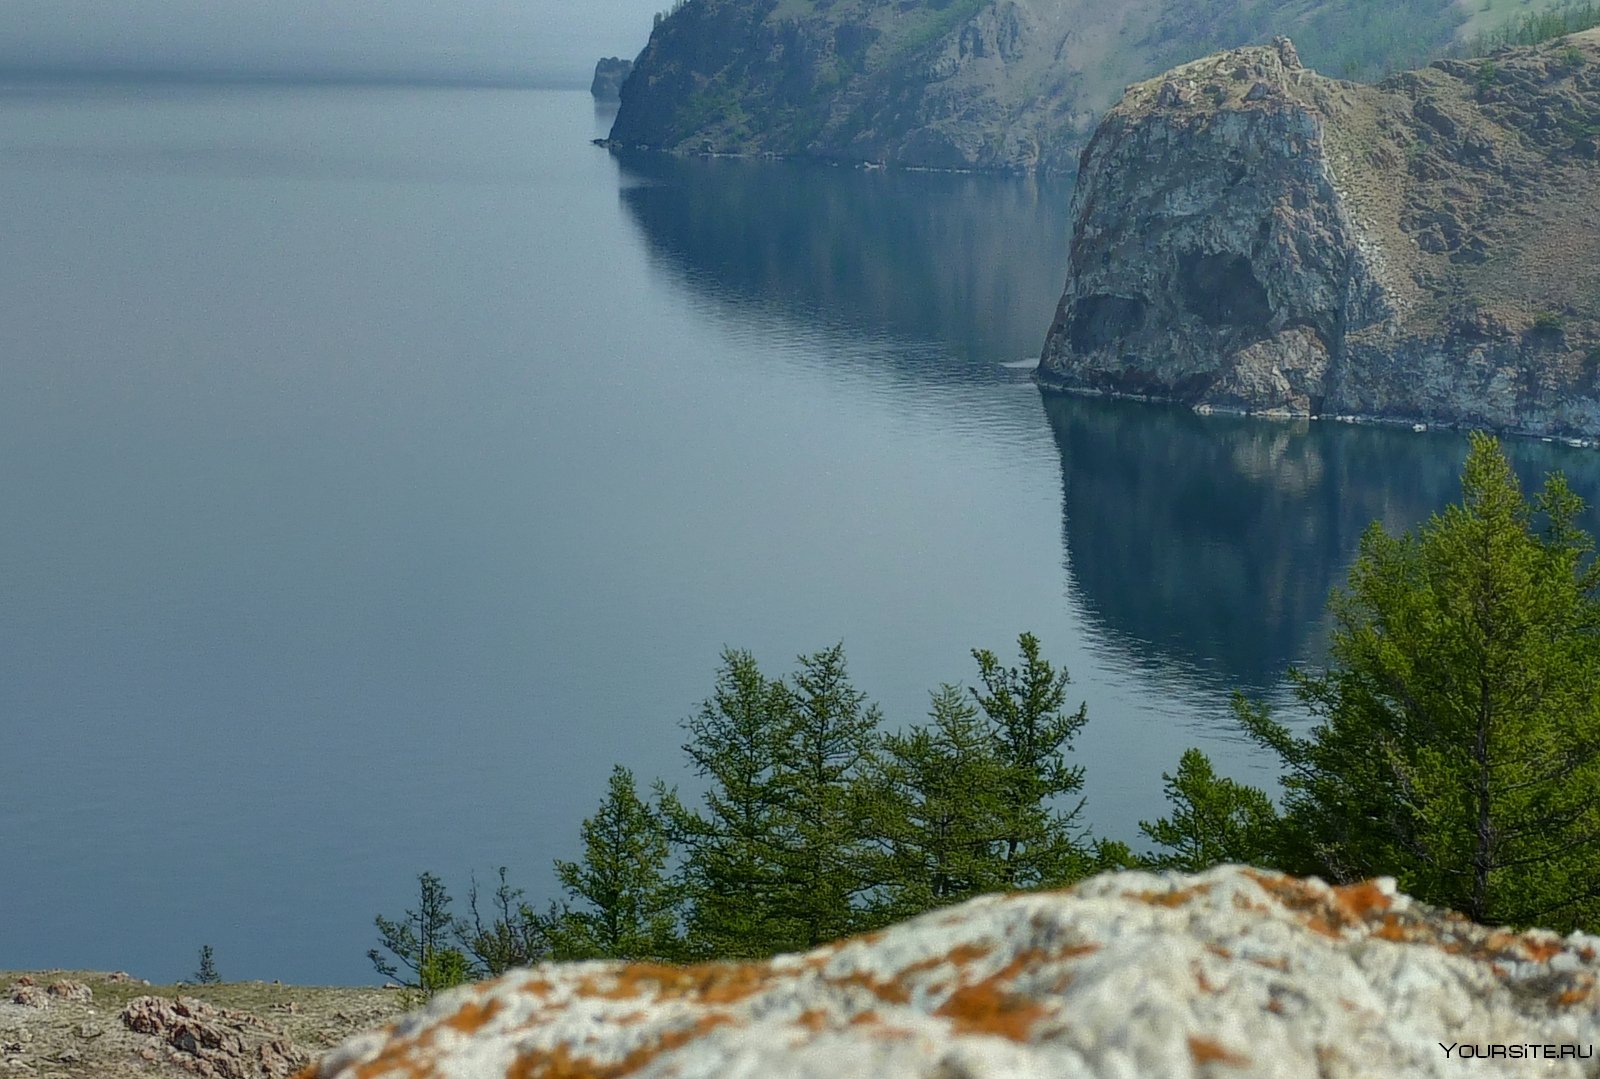 Про глубокое озеро. Байкал наследие ЮНЕСКО. Озеро Байкал. Озеро Байкал природное наследие ЮНЕСКО. Озеро Байкал всемирное наследие России.